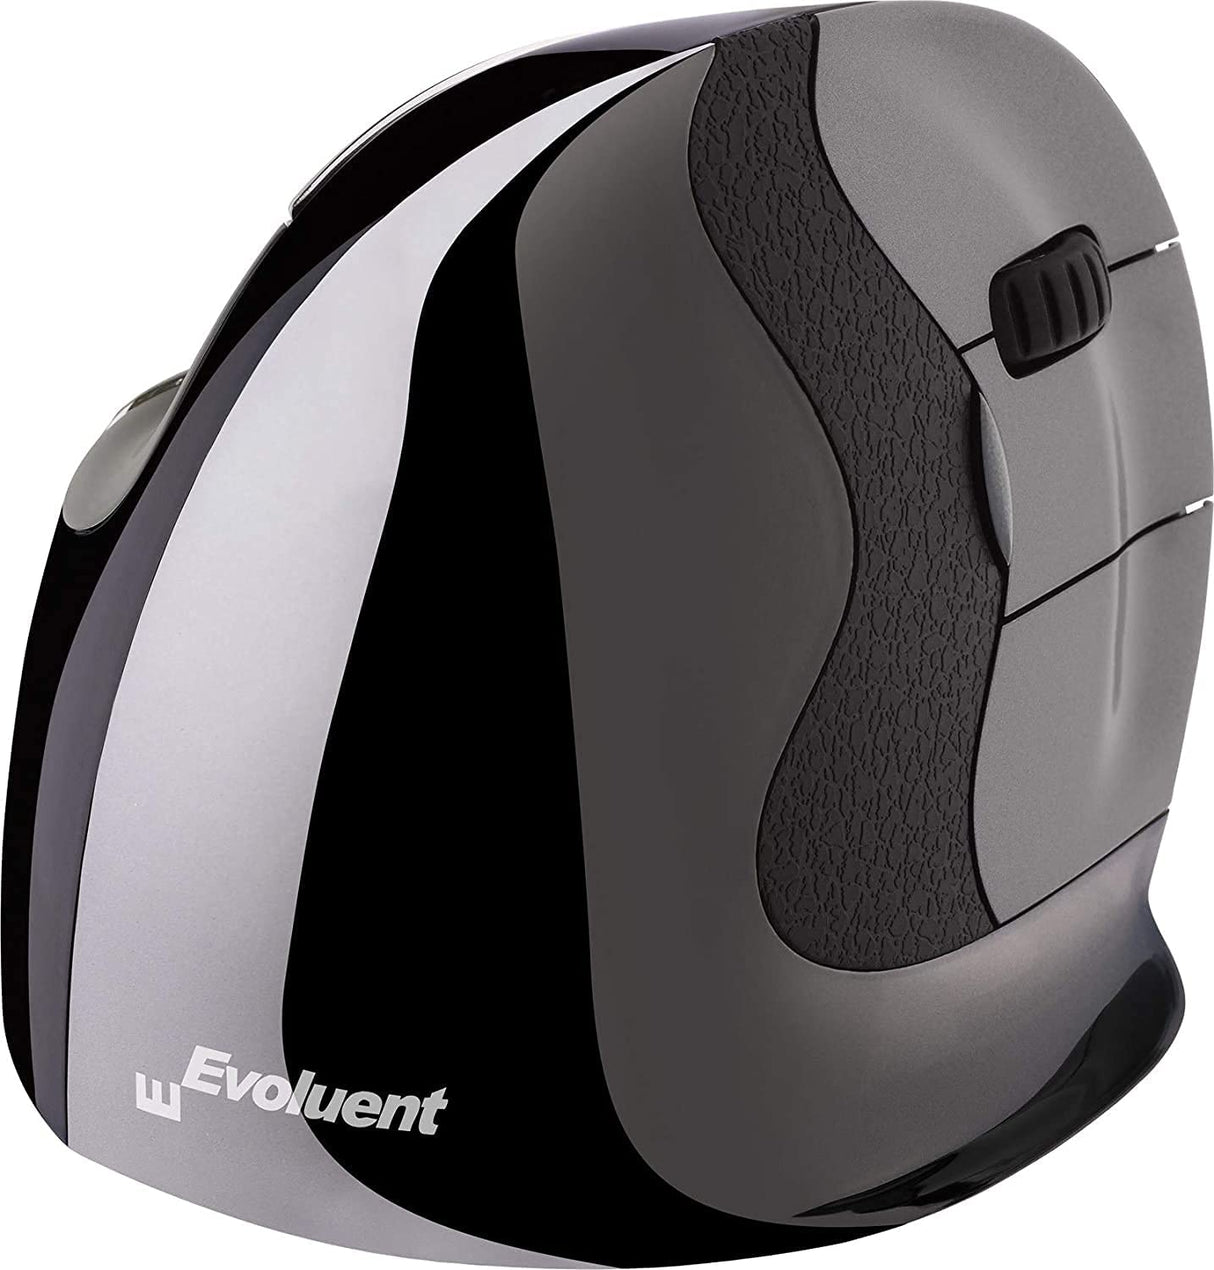 Evoluent VerticalMouse (The Original Brand Since 2002) VMDMW Regular Size, Right Hand Ergonomic Mouse with USB Wireless Receiver Regular Wireless